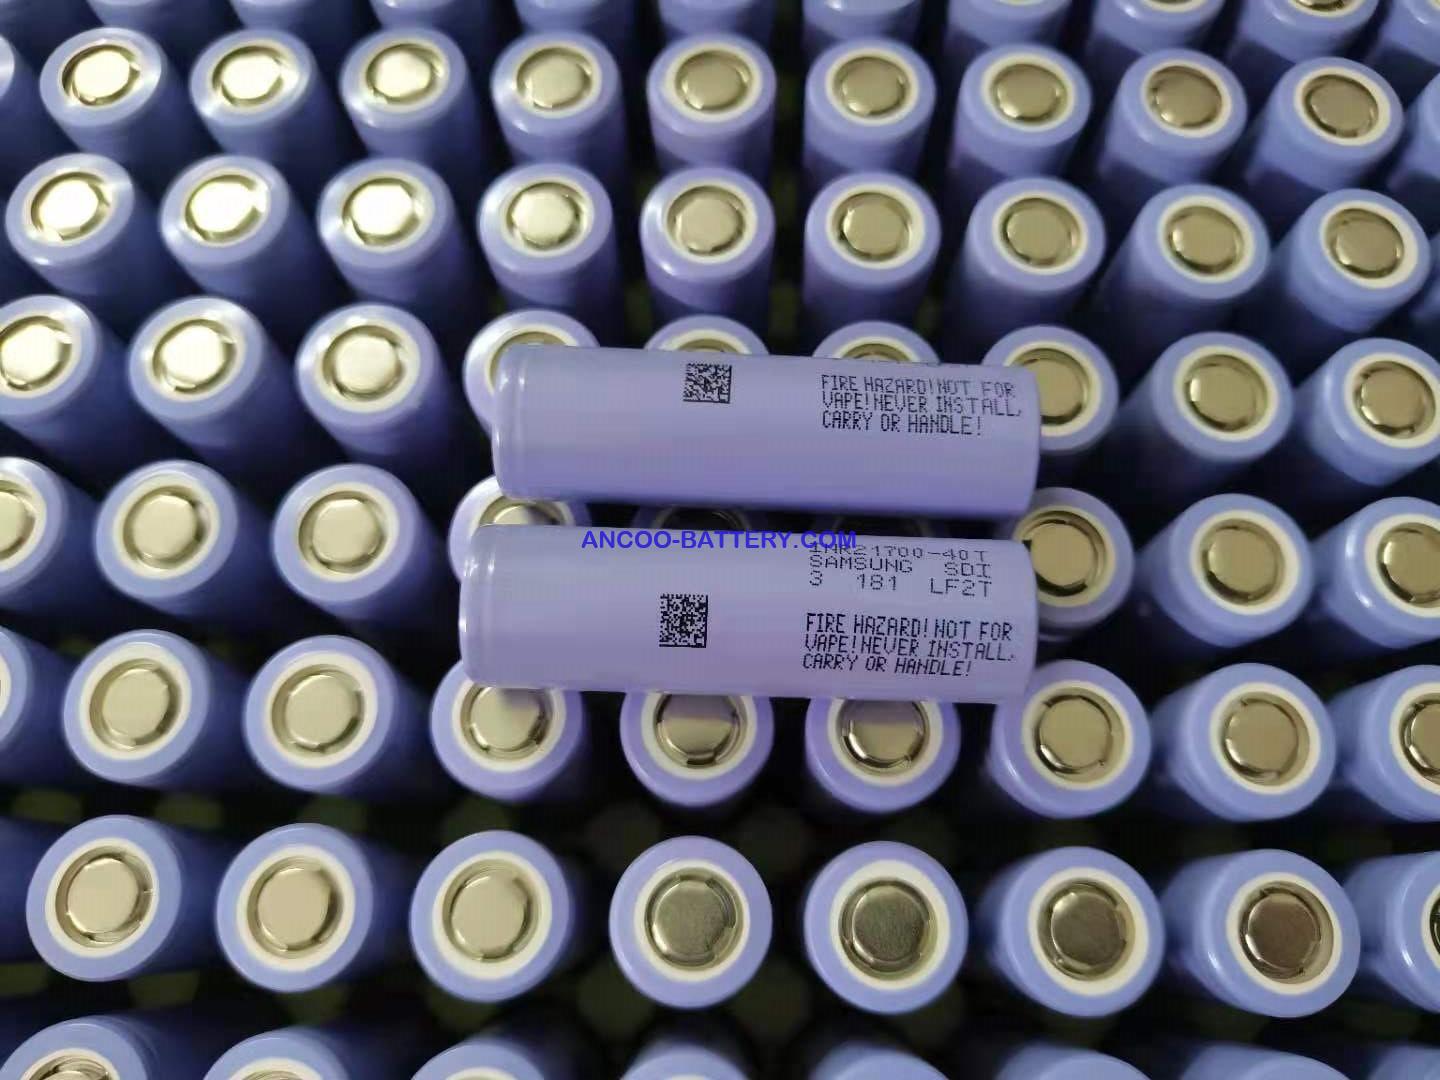 Samsung INR21700-40T 4000MAh 3.6V Lithium-ion Battery